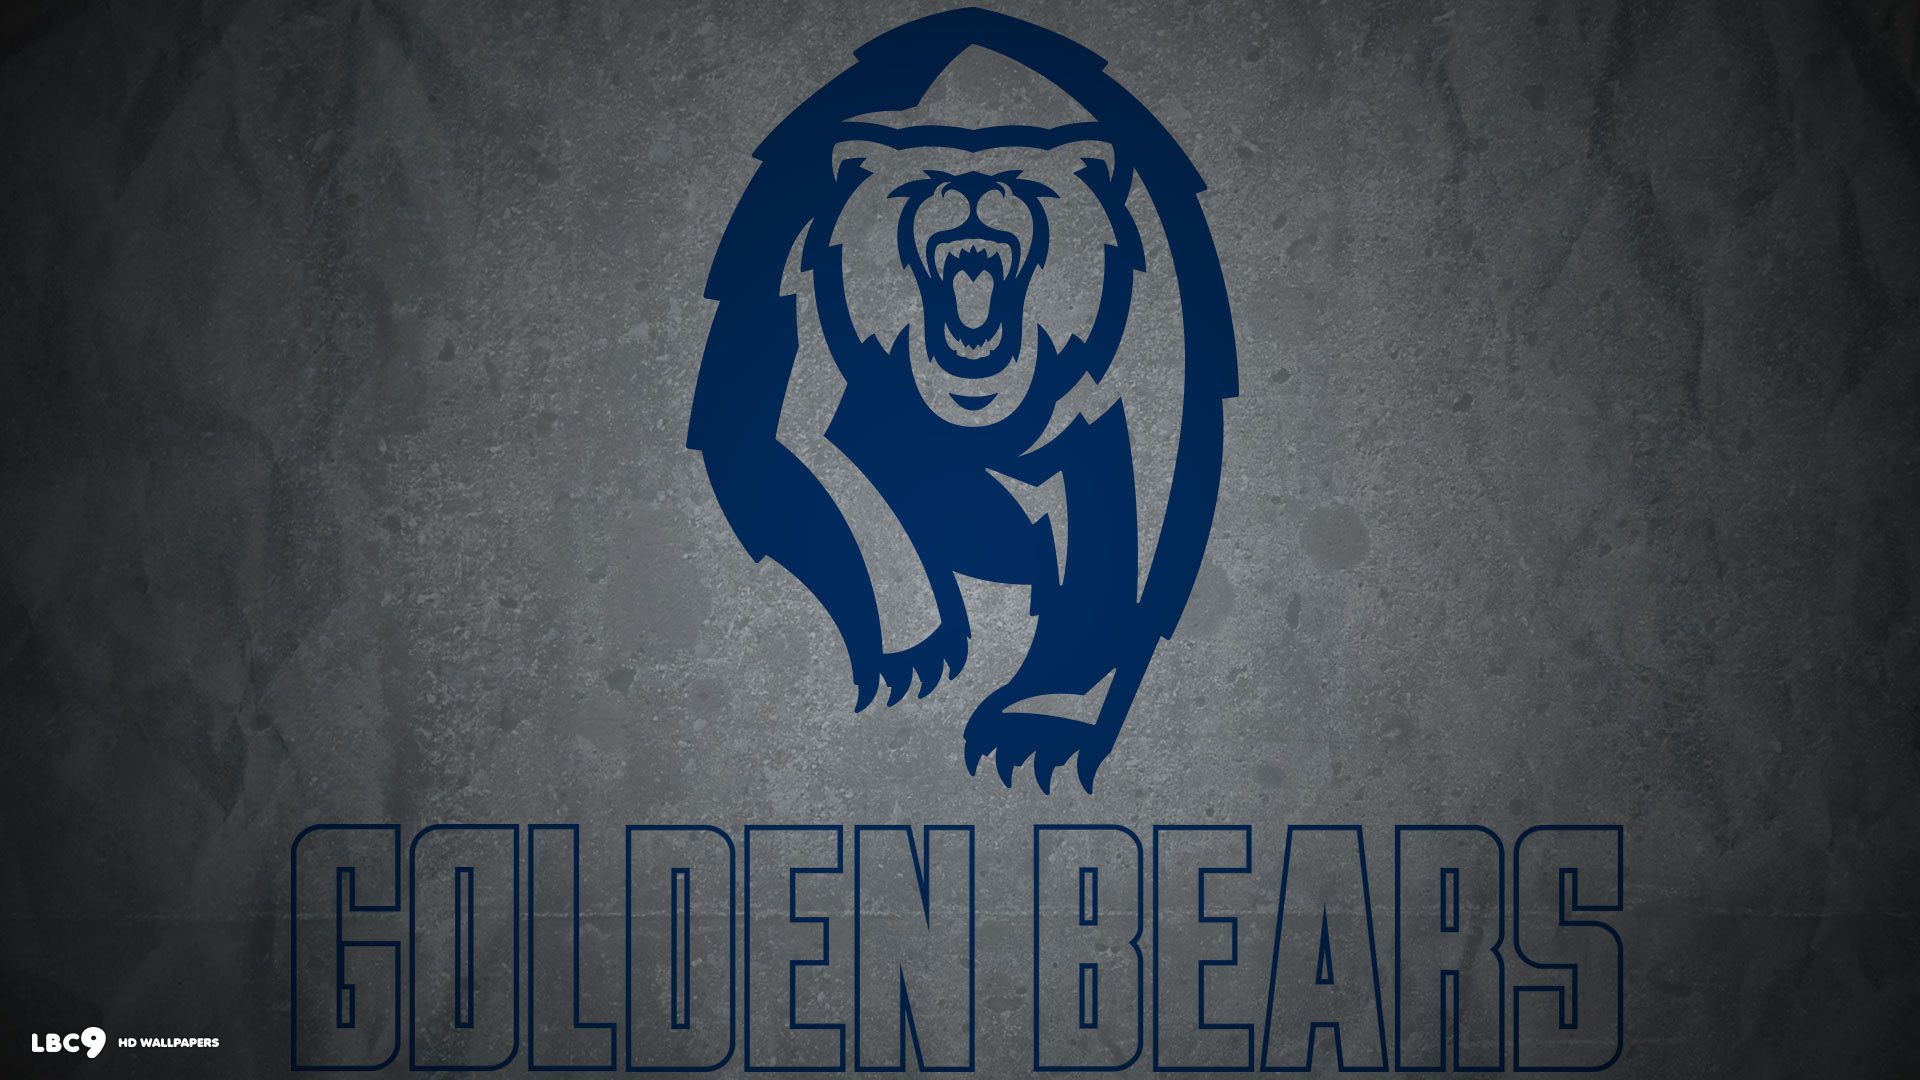 California golden bears wallpaper 5 / 5 college athletics hd